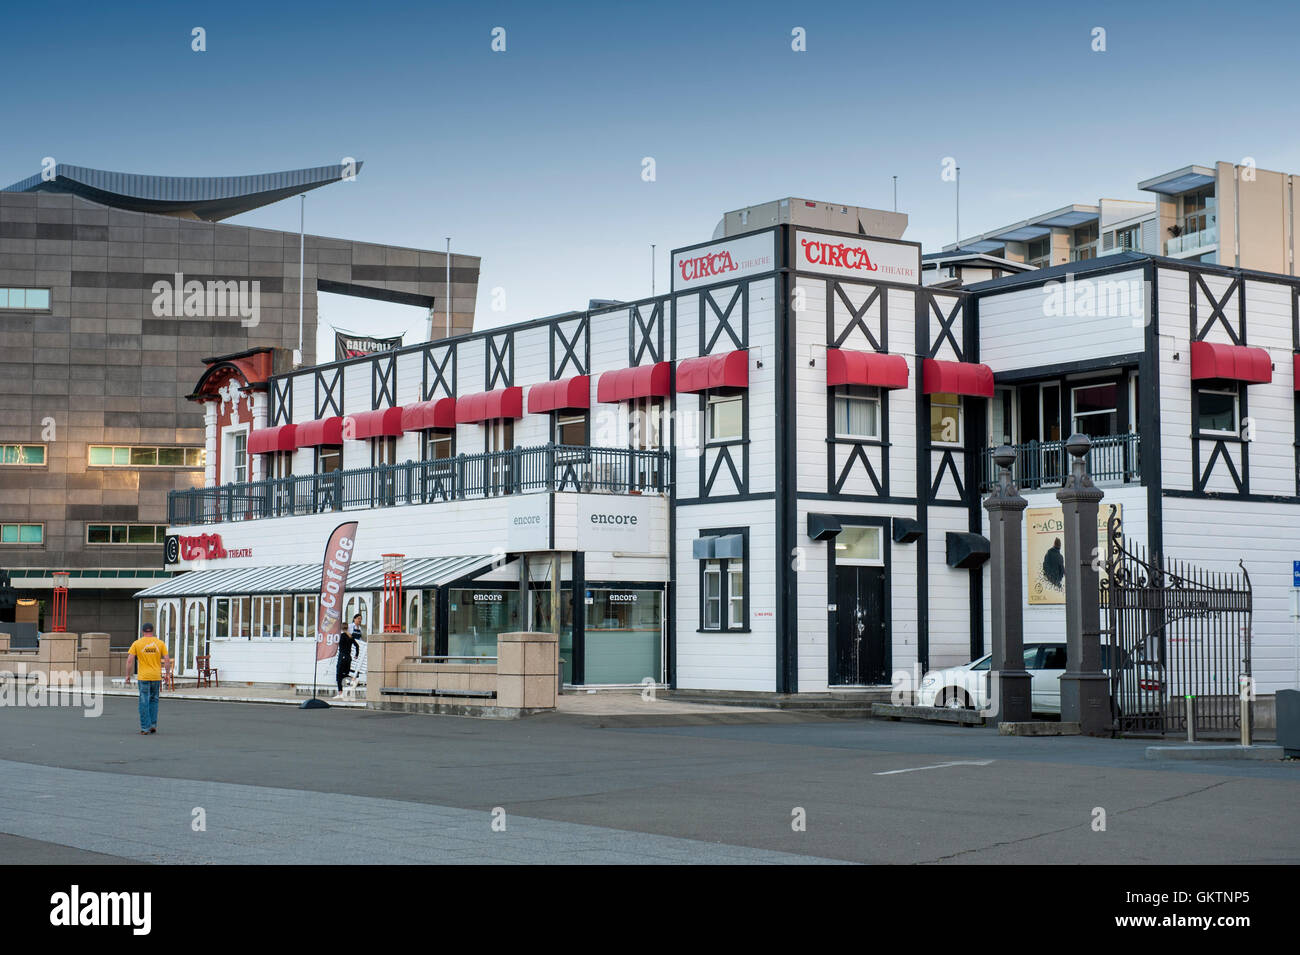 Wellington, New Zealand - March 3, 2016: Circa Theatre on Wellington waterfront, north island of New Zealand Stock Photo